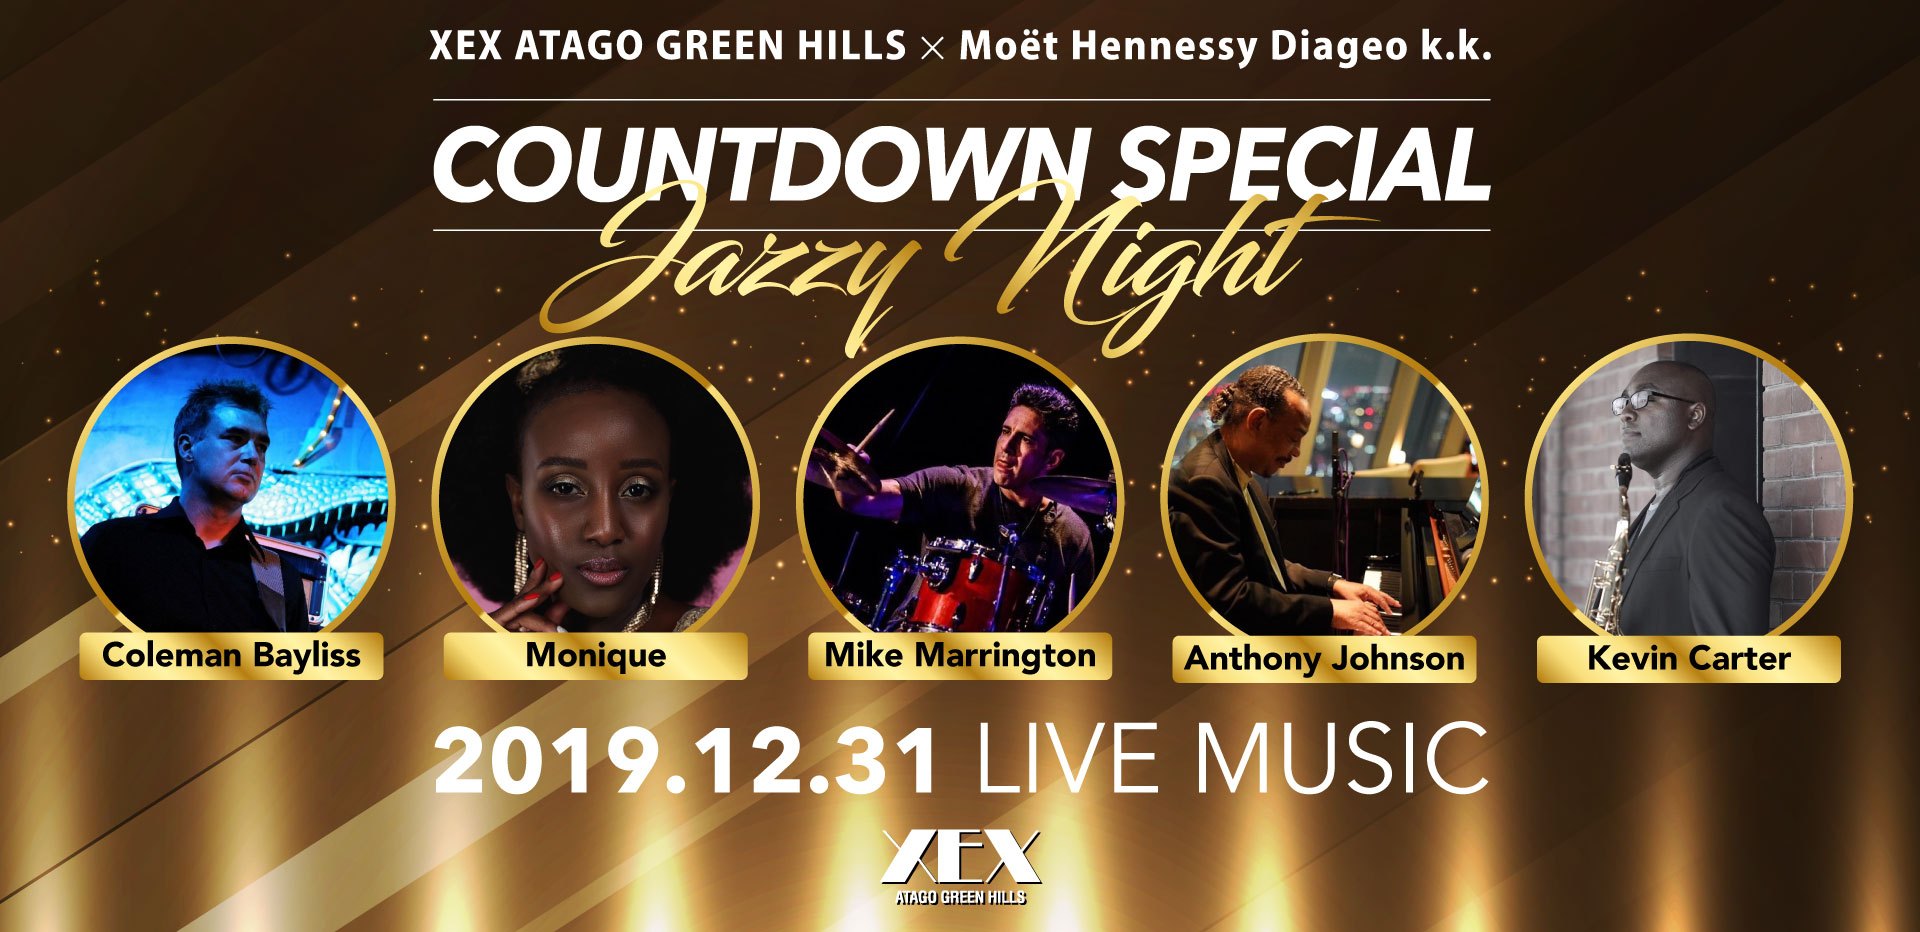 XEX ATAGO GREEN HILLS - Countdown Special